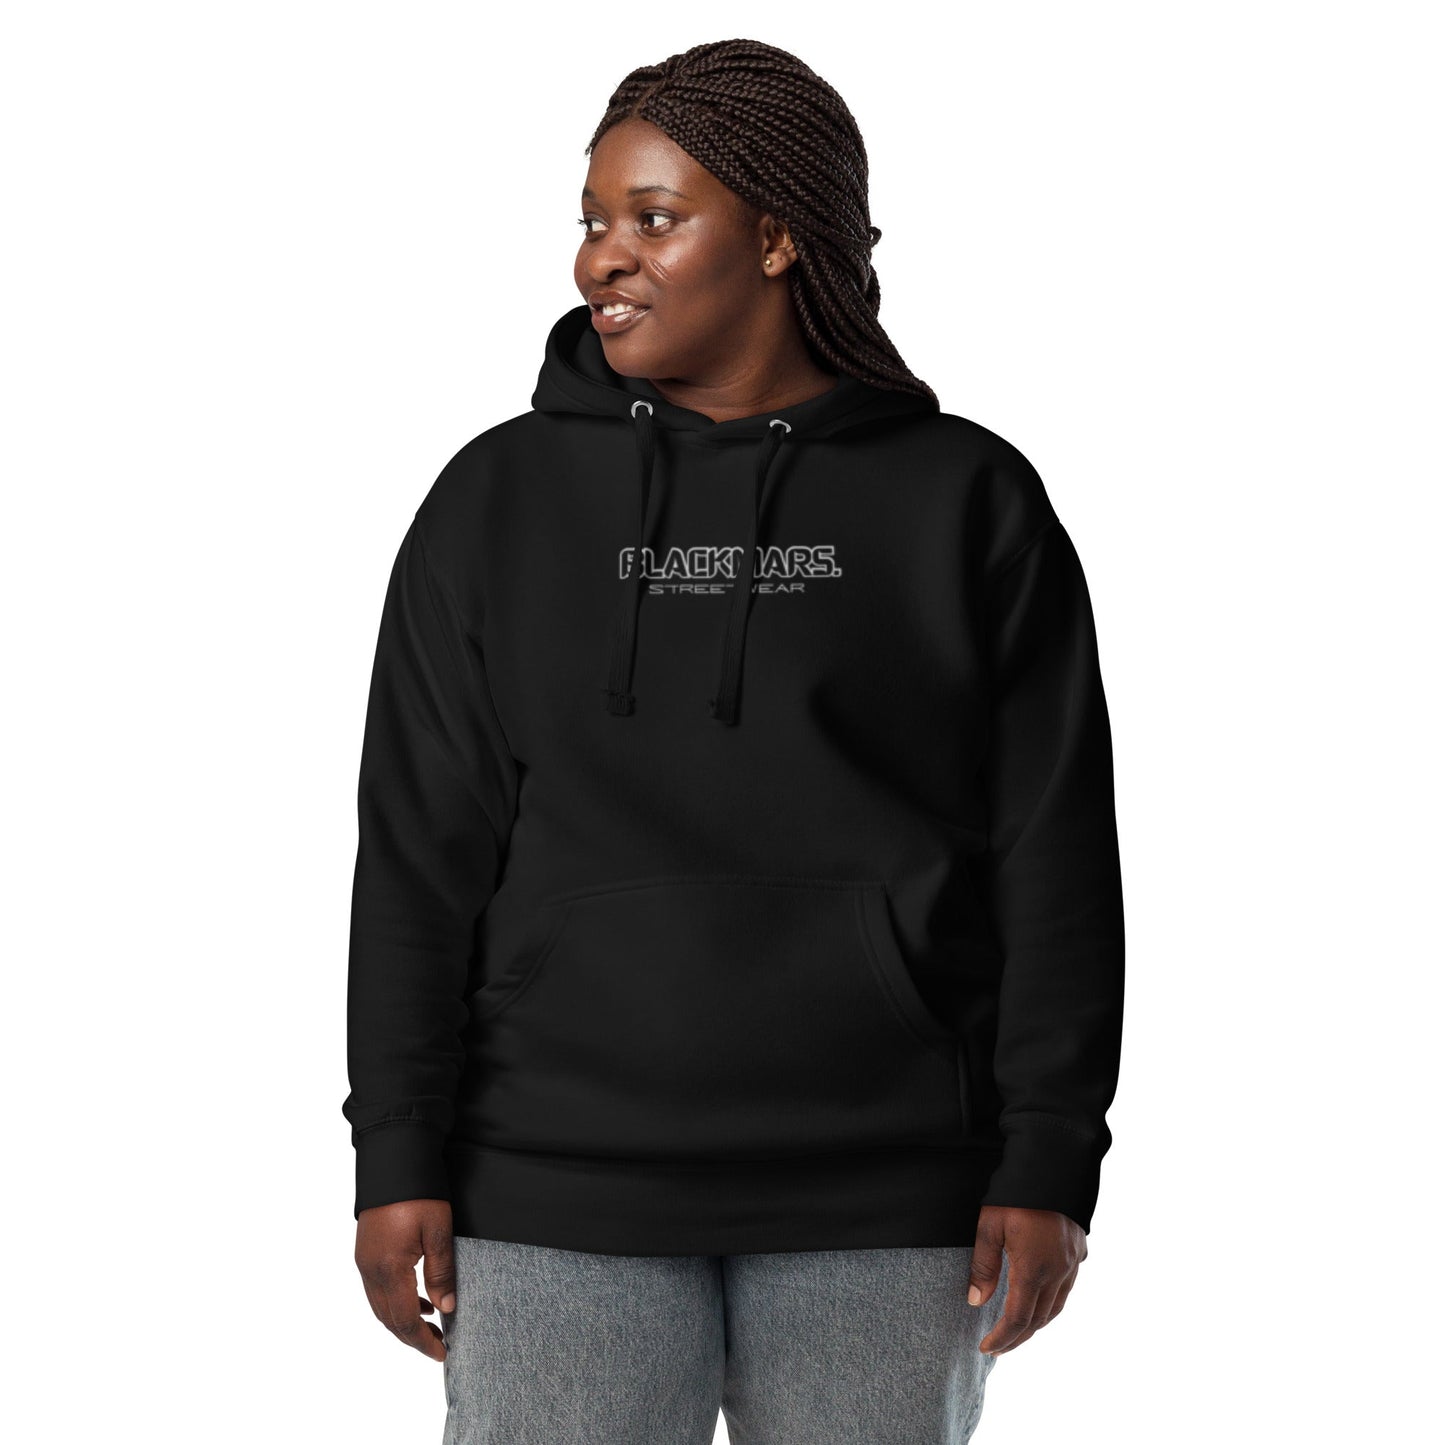 BlackMars Woman’s  Hoodie - Premium  from BlackMars  - Just £36.50! Shop now at BlackMars 36.50BlackMars 